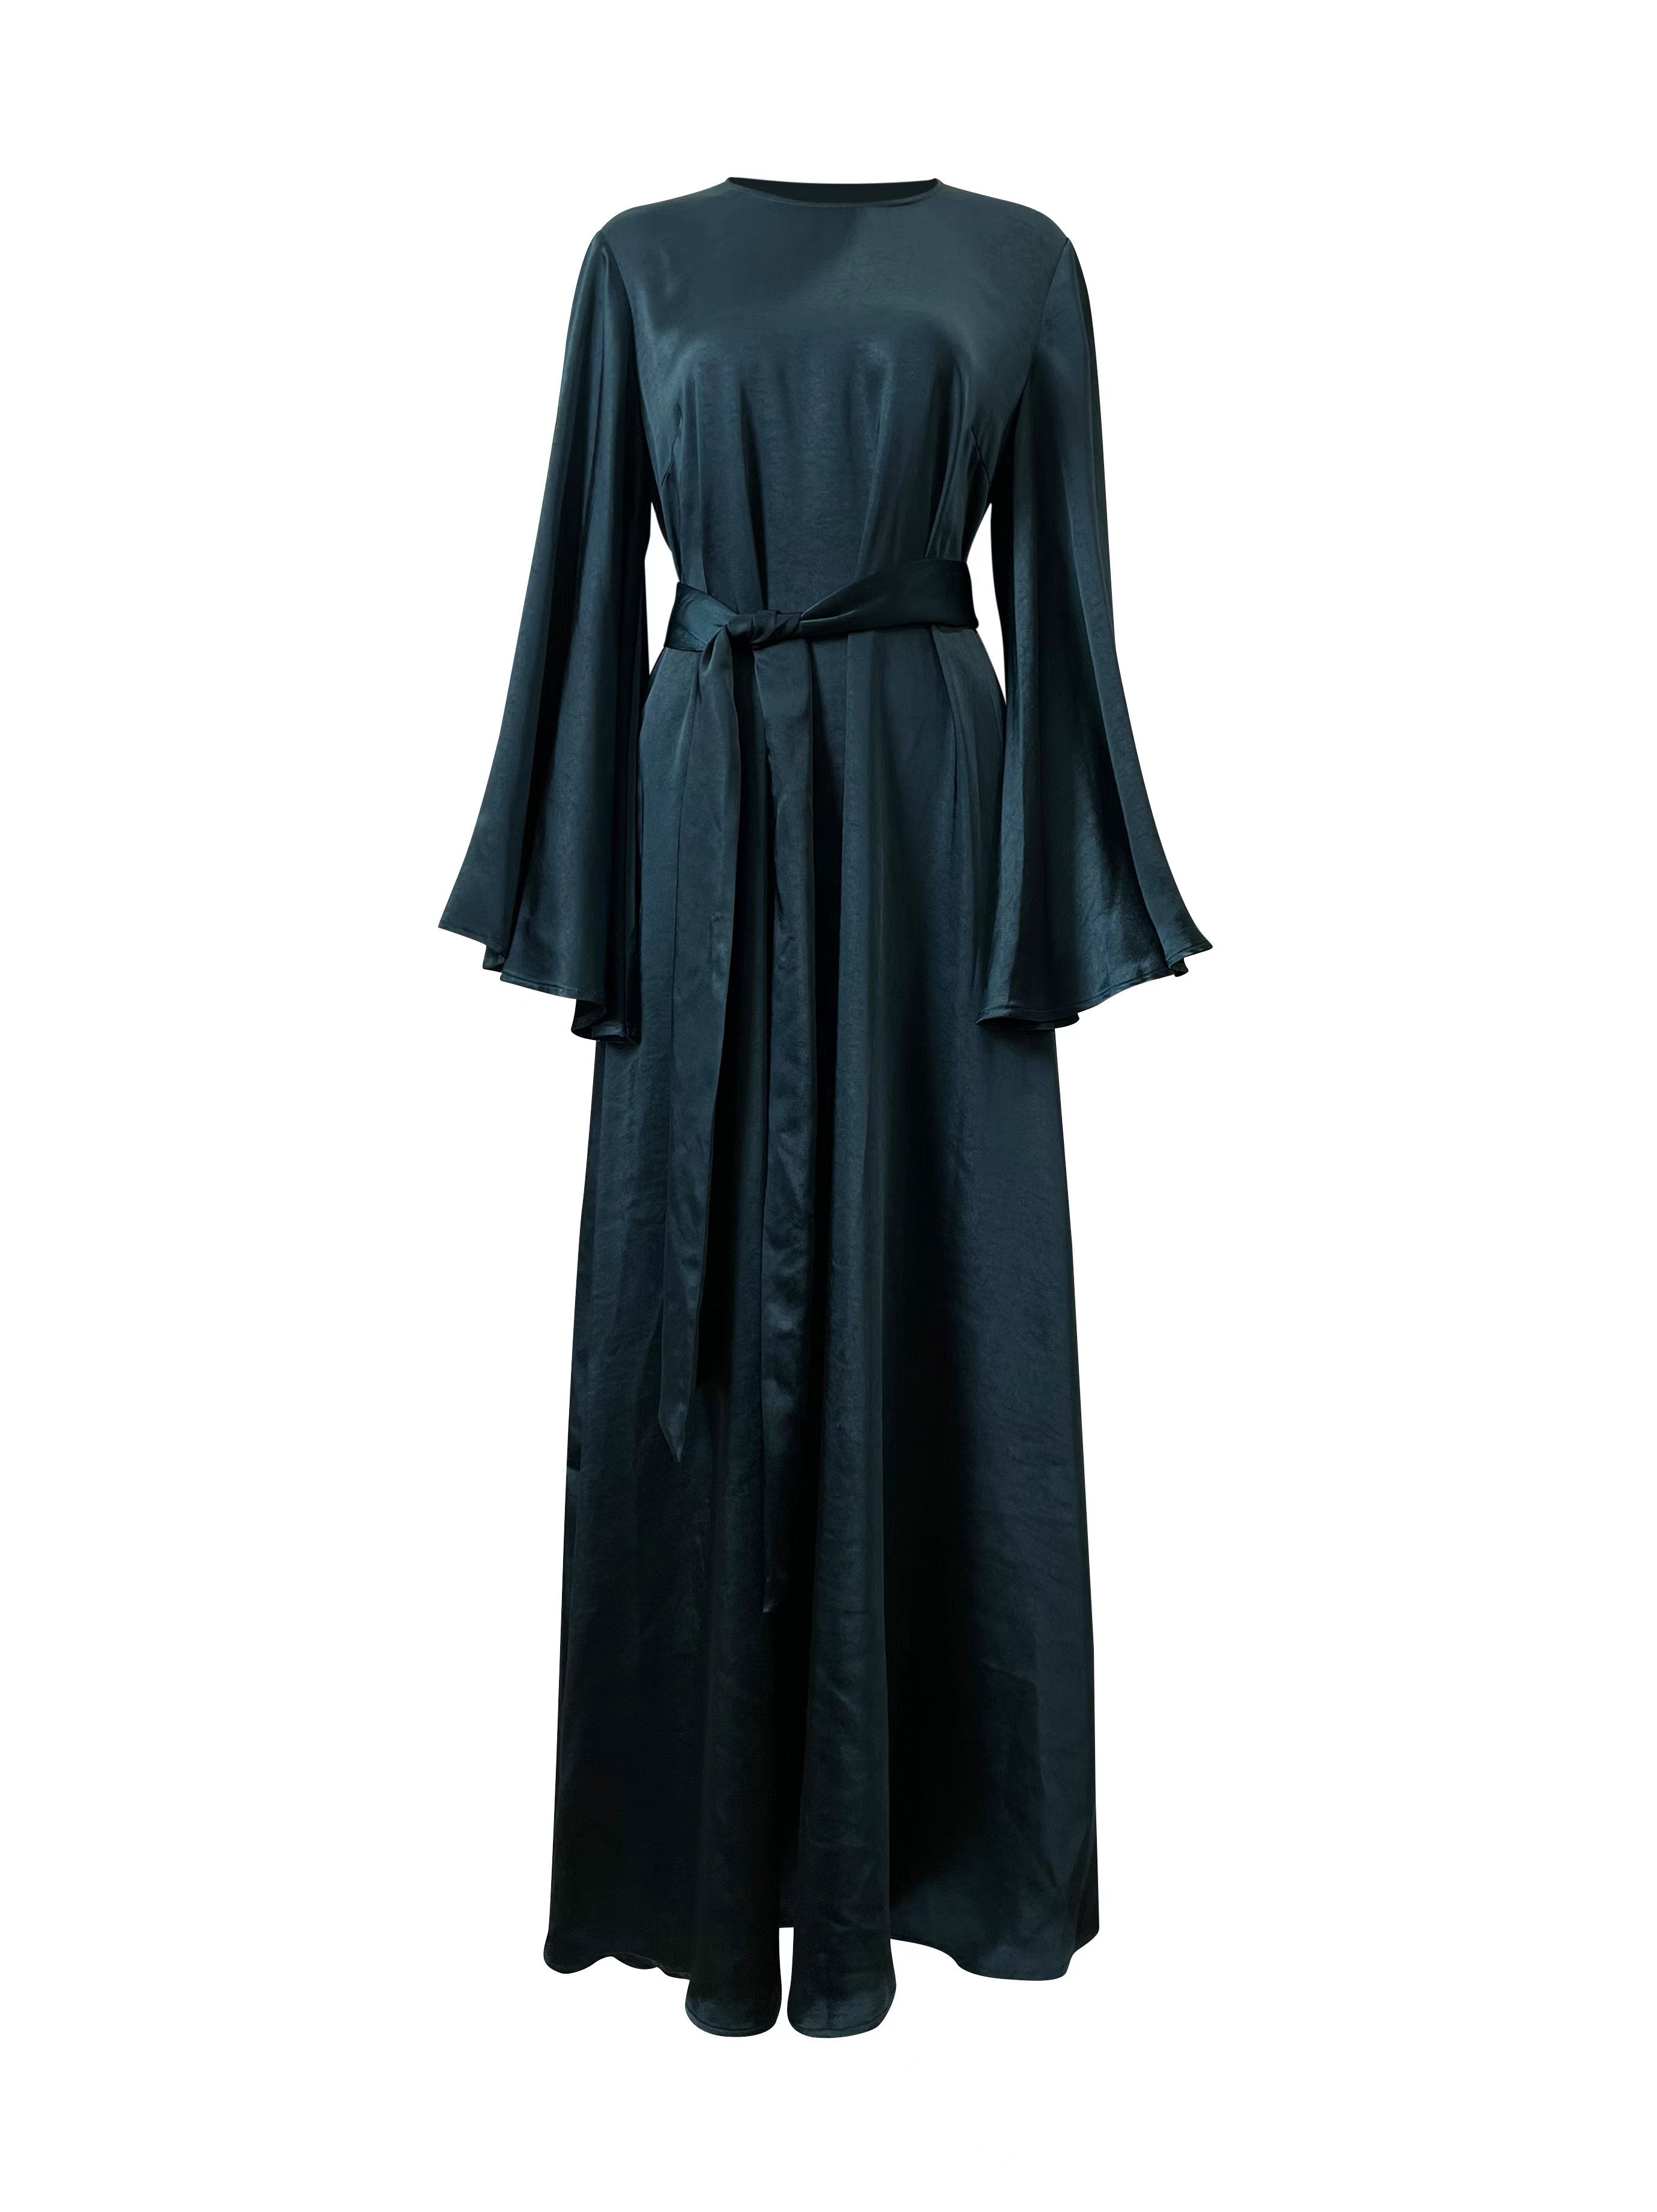 Aliya Evening Dress - Teal